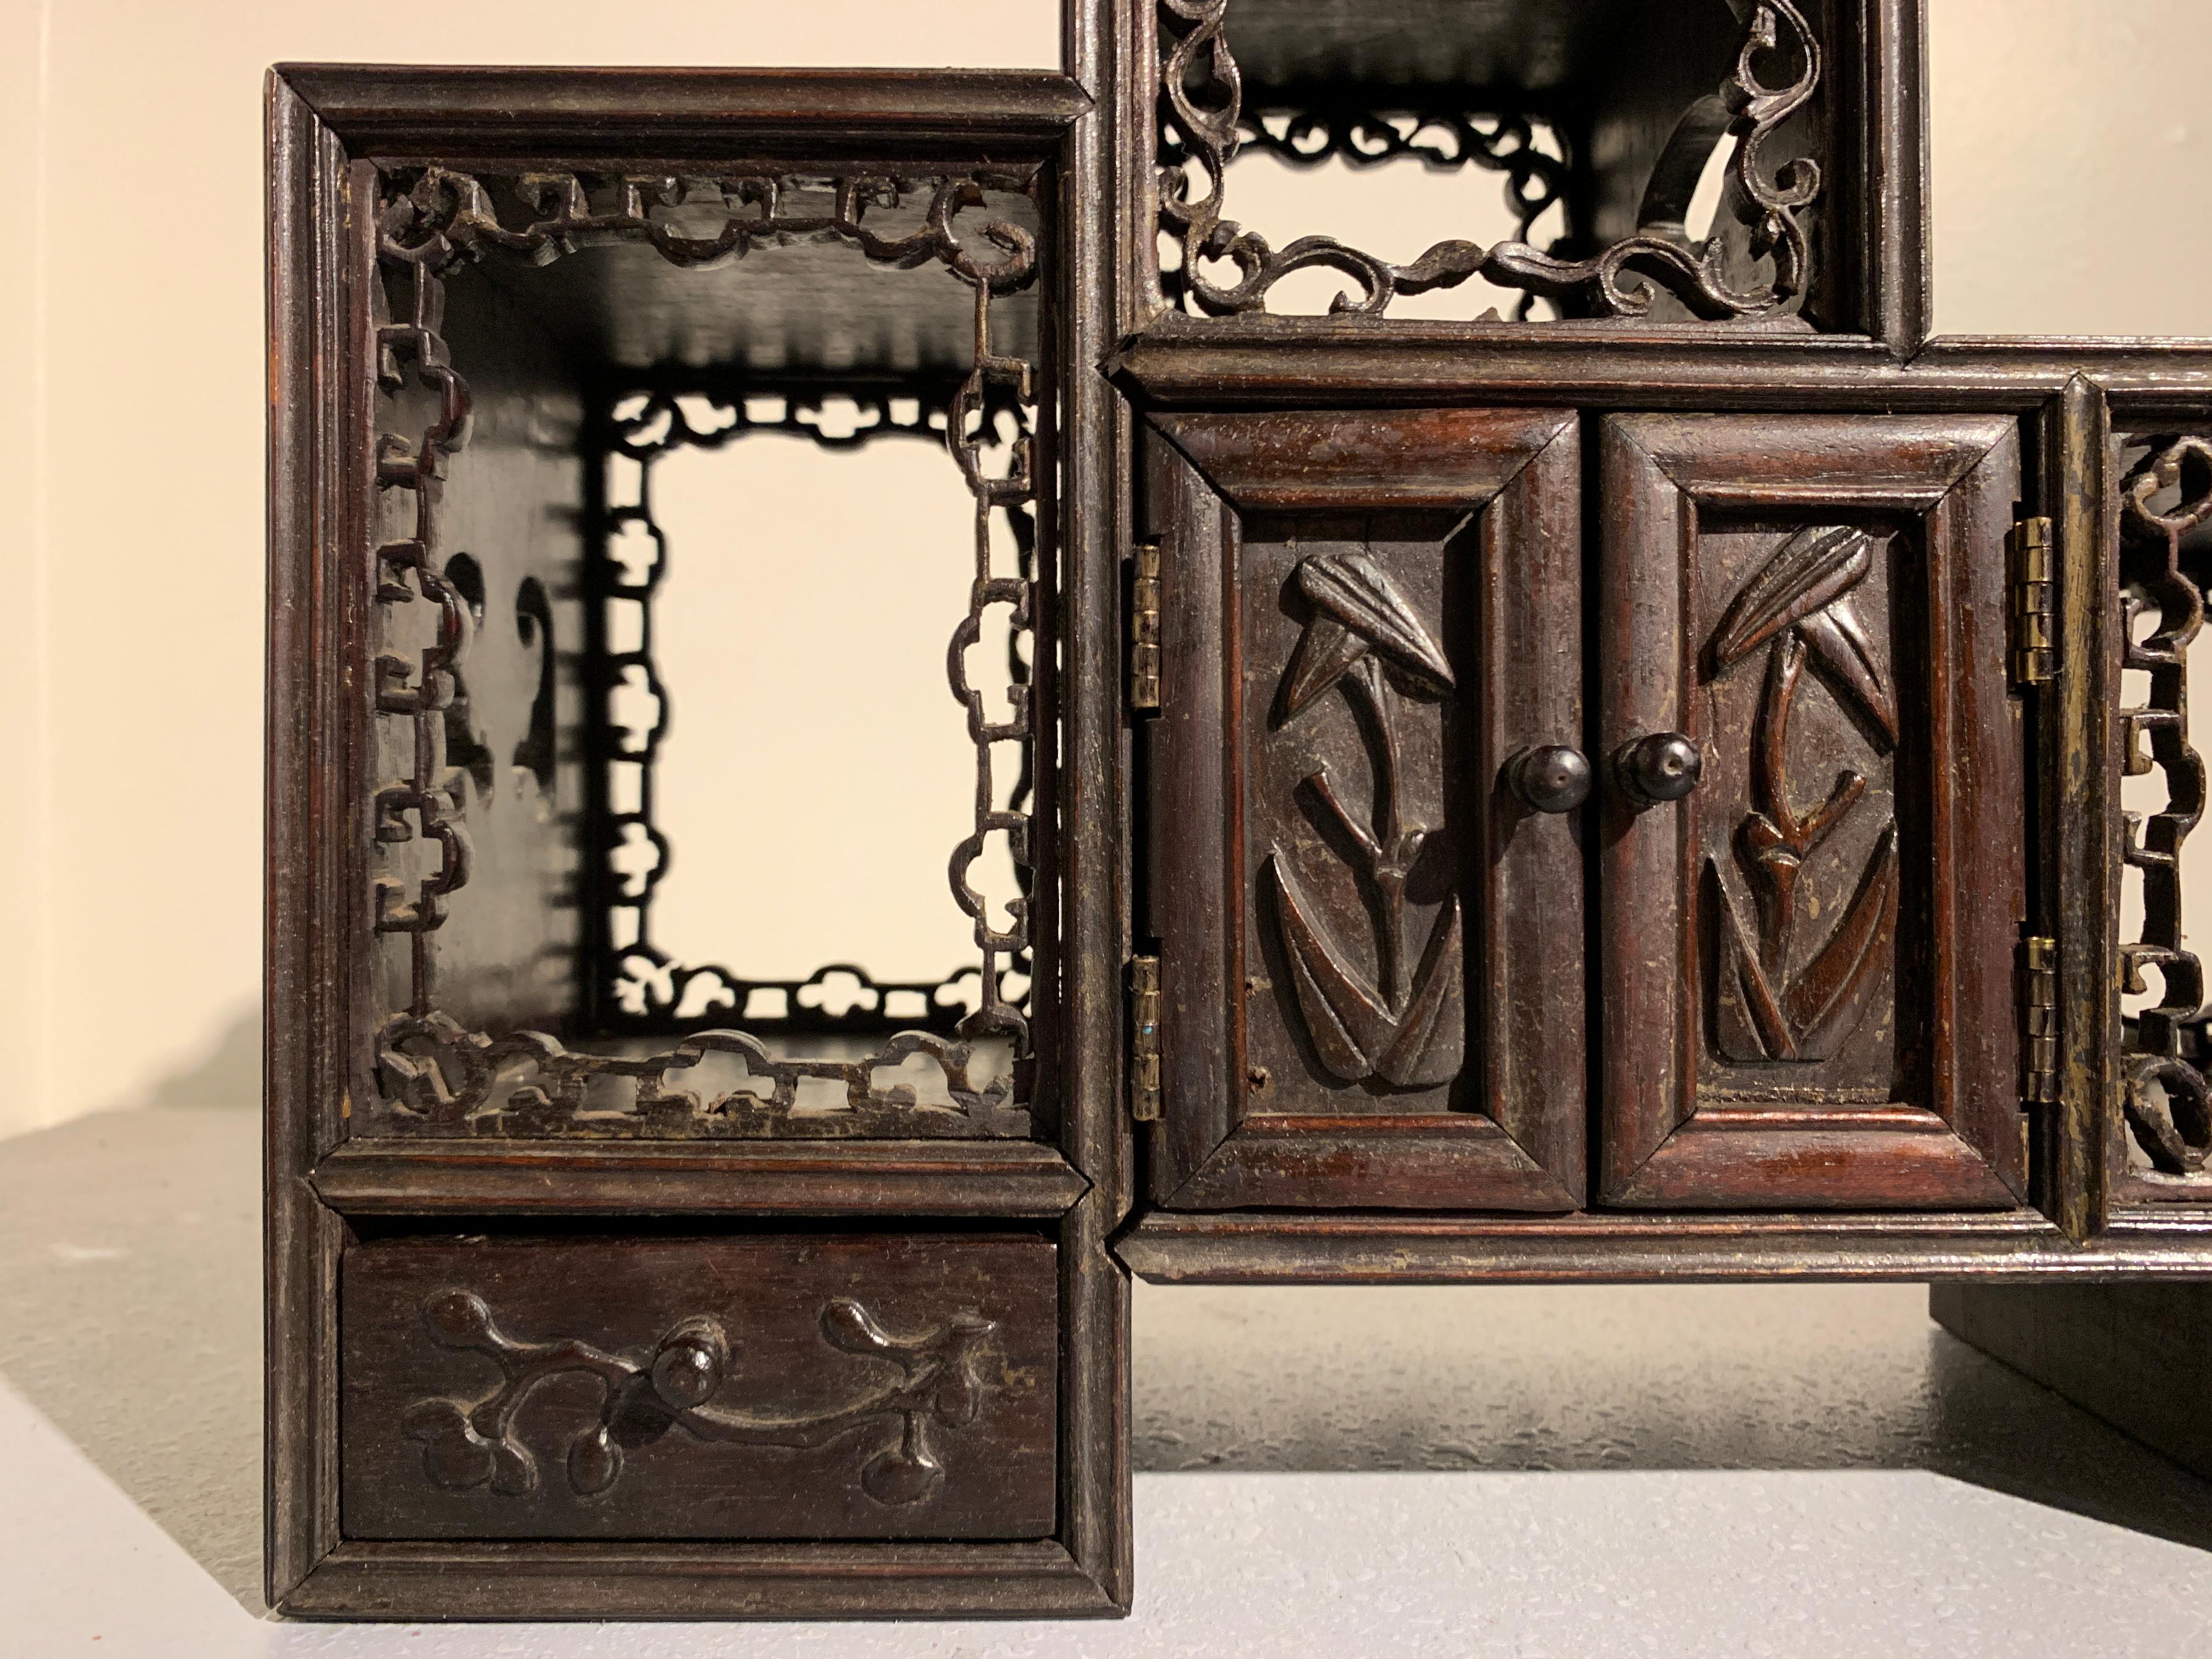 Chinese Late Qing Dynasty Hardwood Miniature Display Cabinet, Doubaoge 6